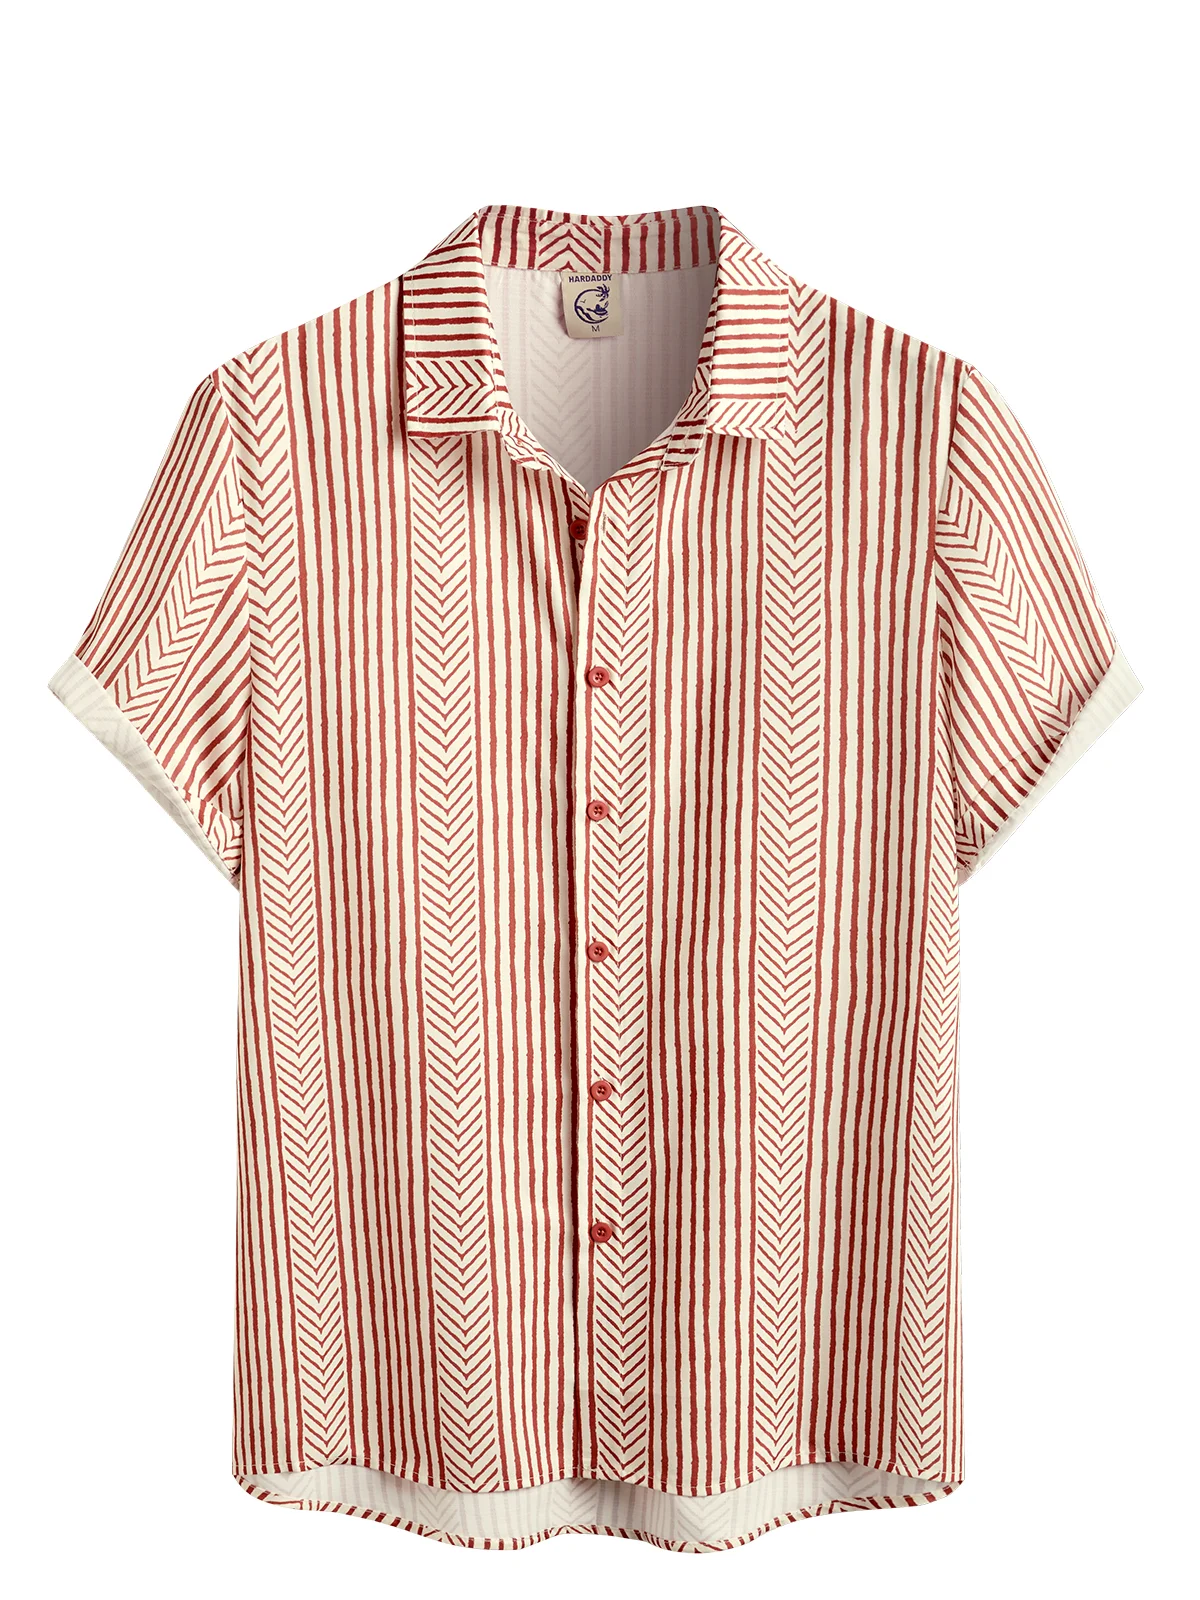 Retro Striped Chest Pocket Short Sleeve Shirt